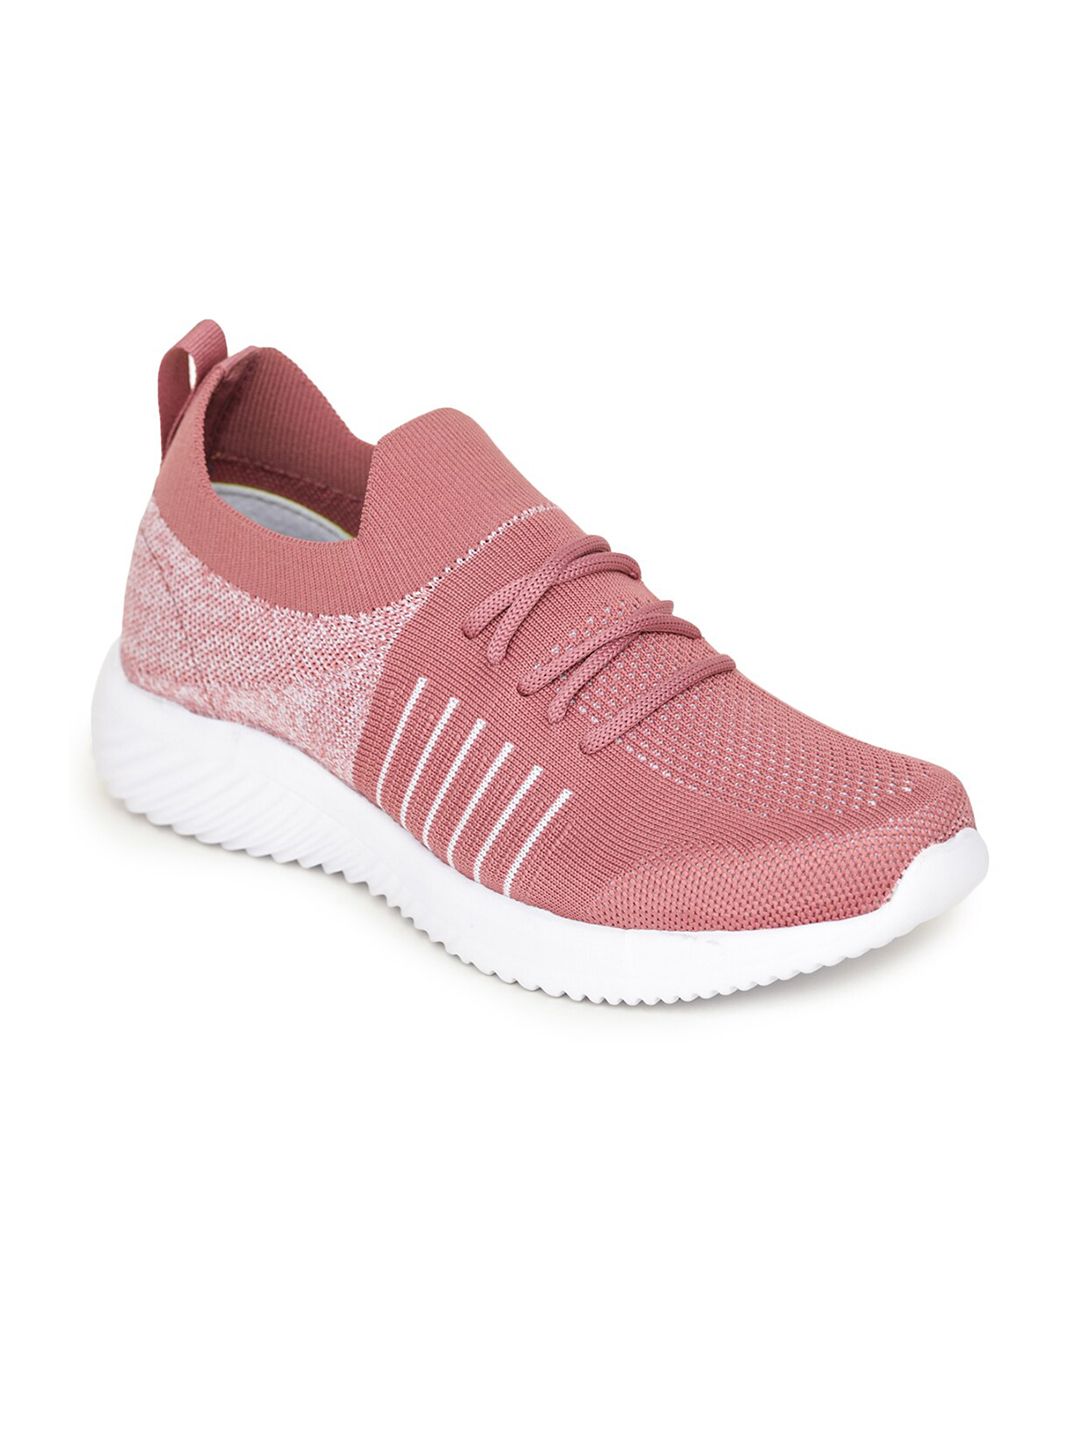 TRASE Women Pink Mesh Running Shoes Price in India